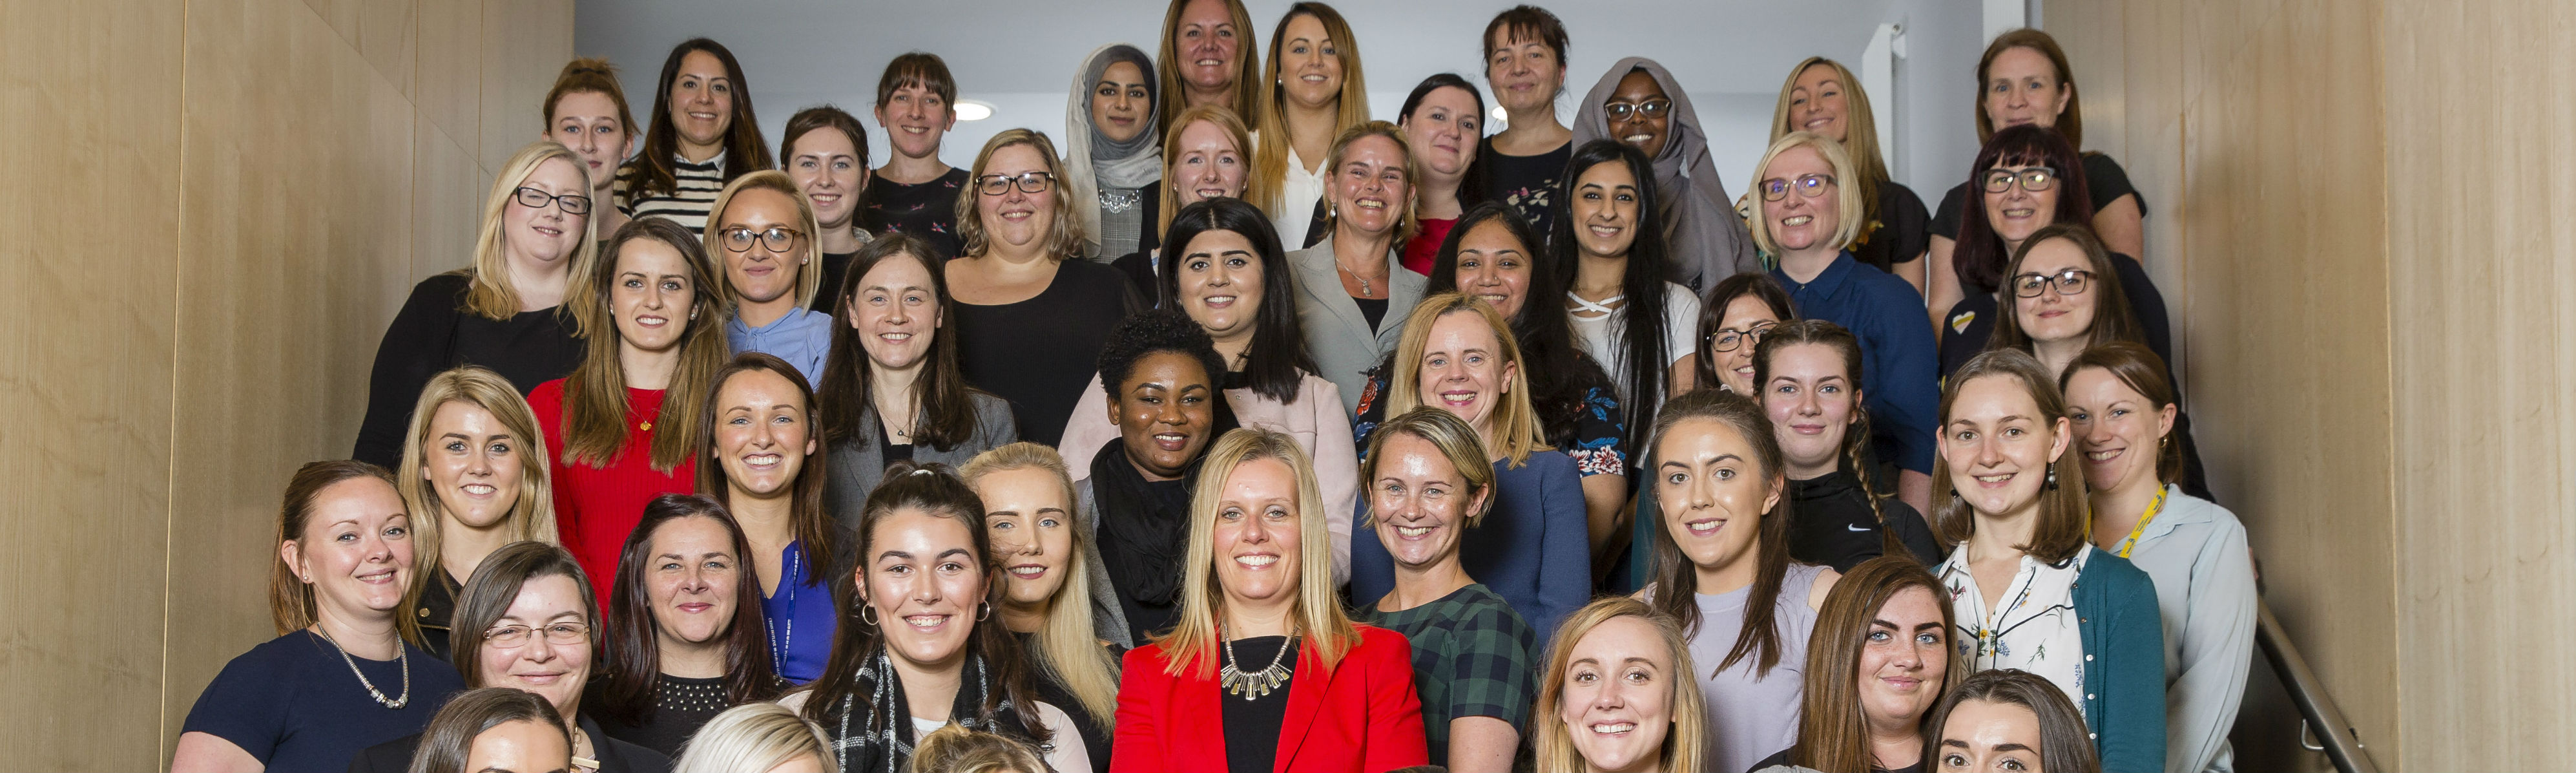 GCU launches mentoring scheme for women in finance